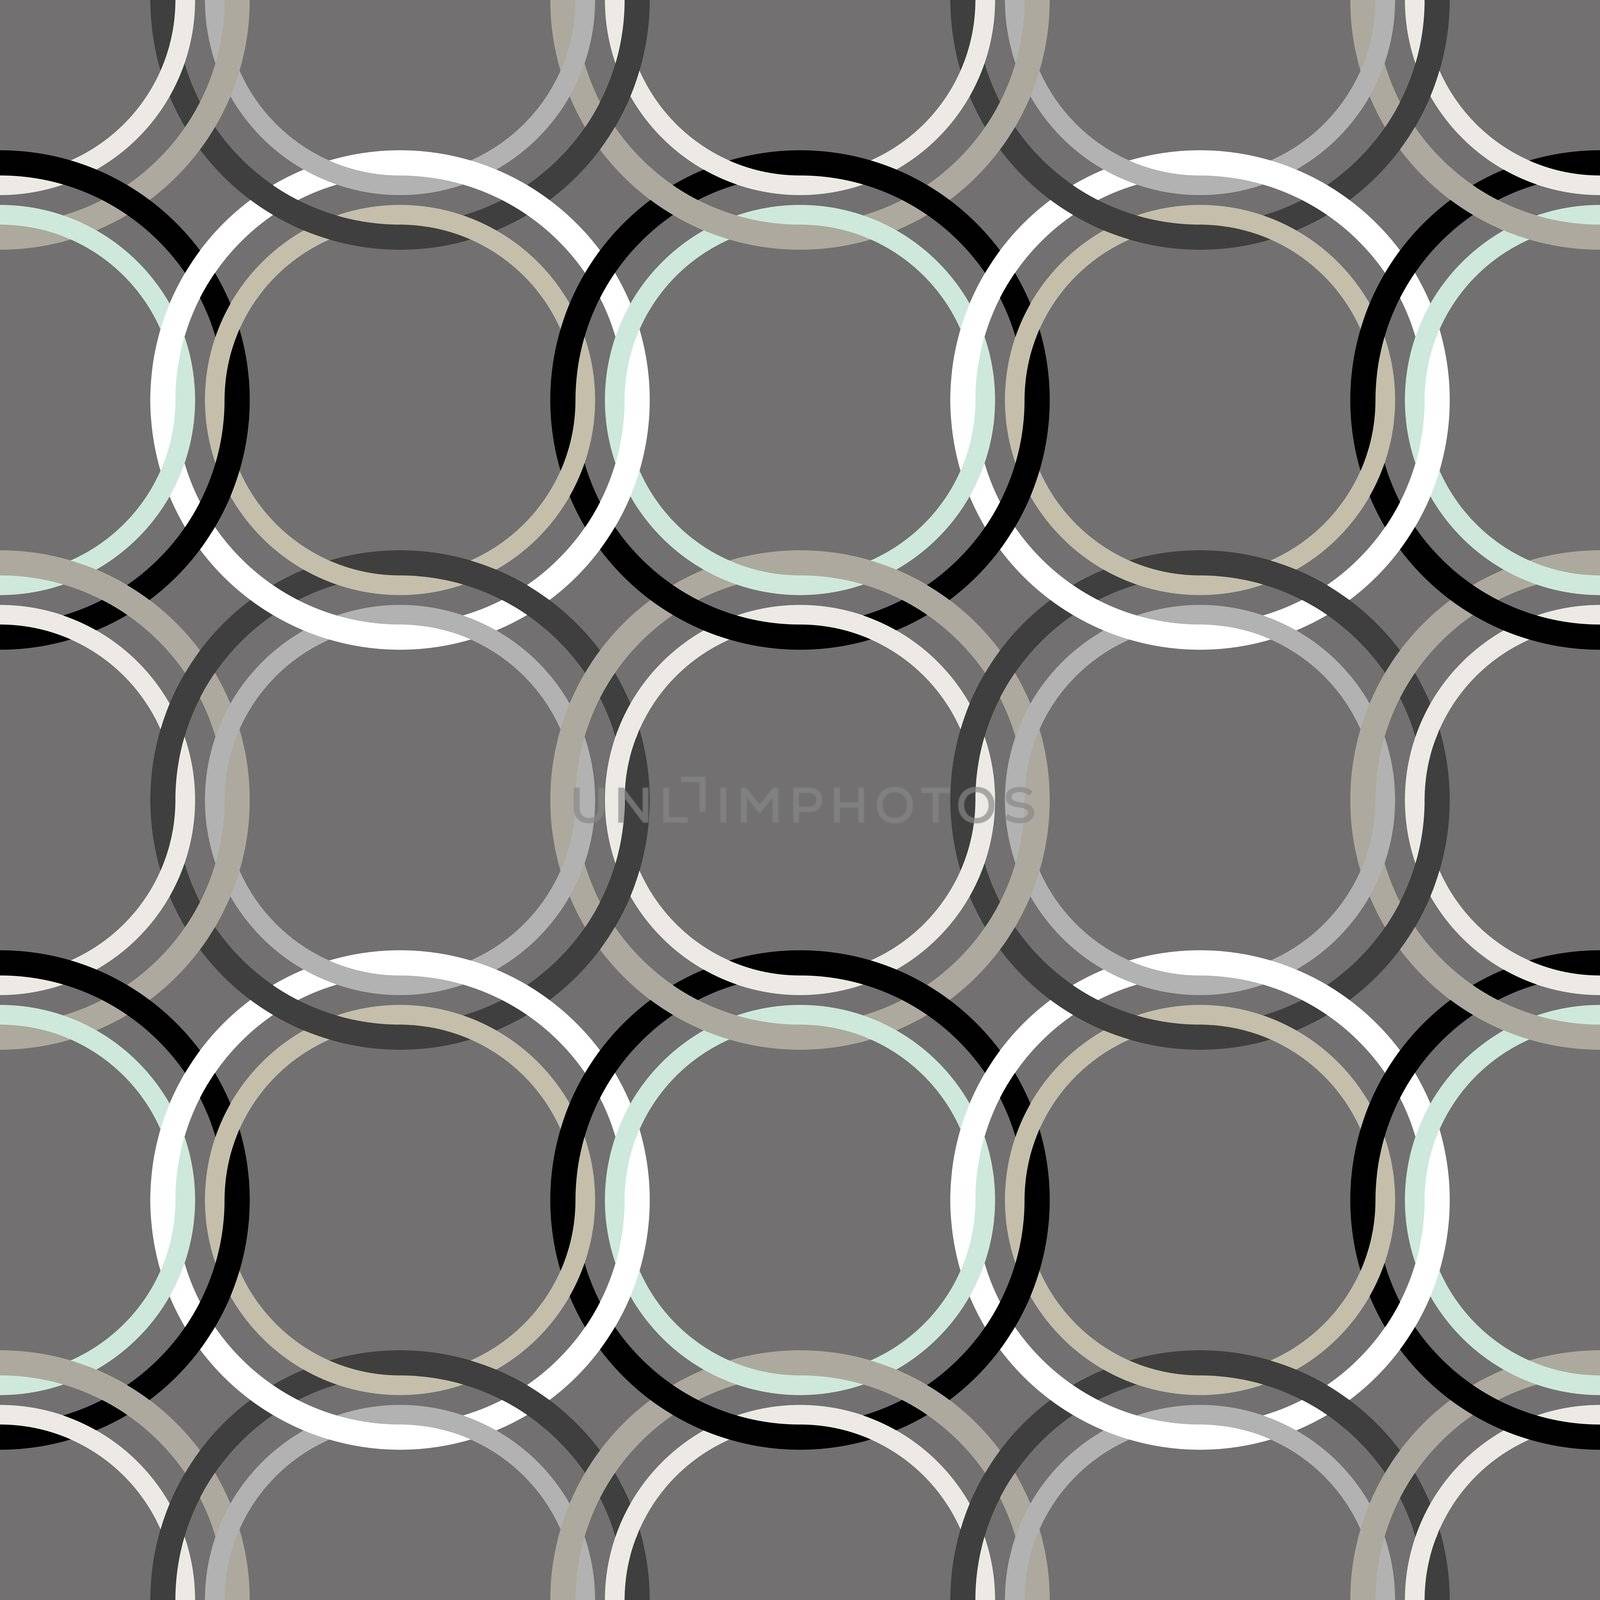 circles seamless pattern, abstract art illustration